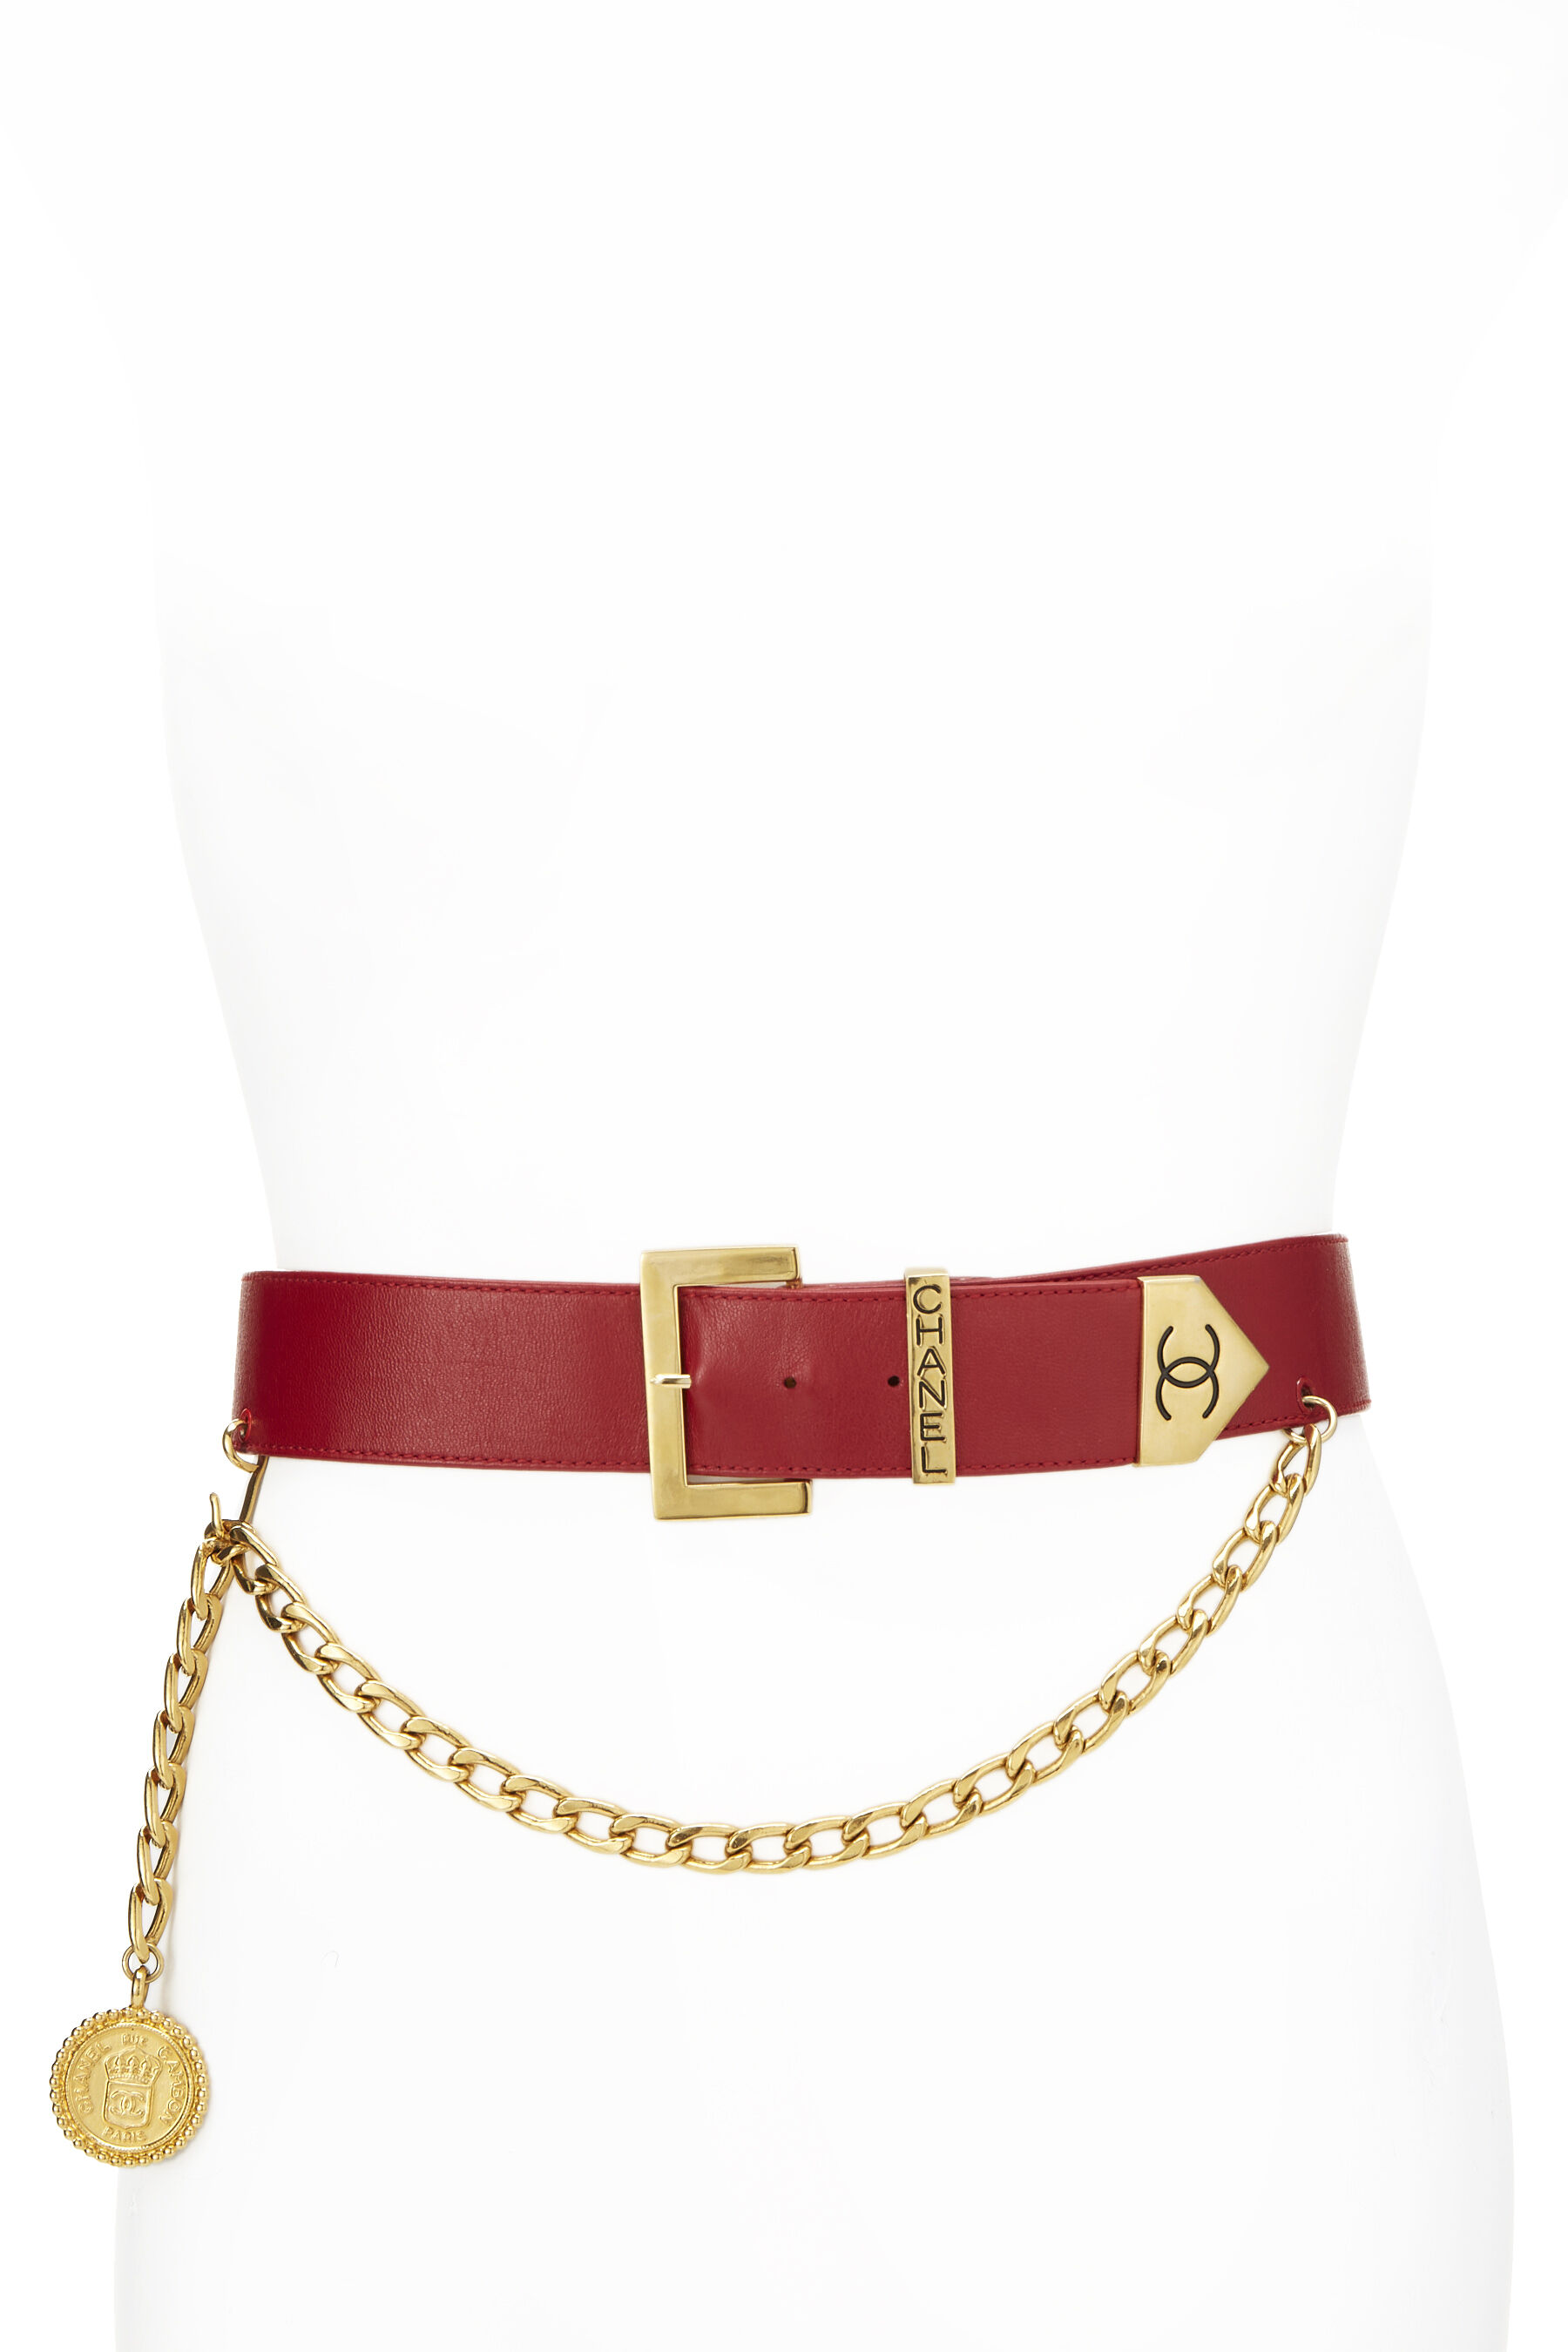 Chanel Red Leather Waist Belt 85 Q6A03D1LRB000